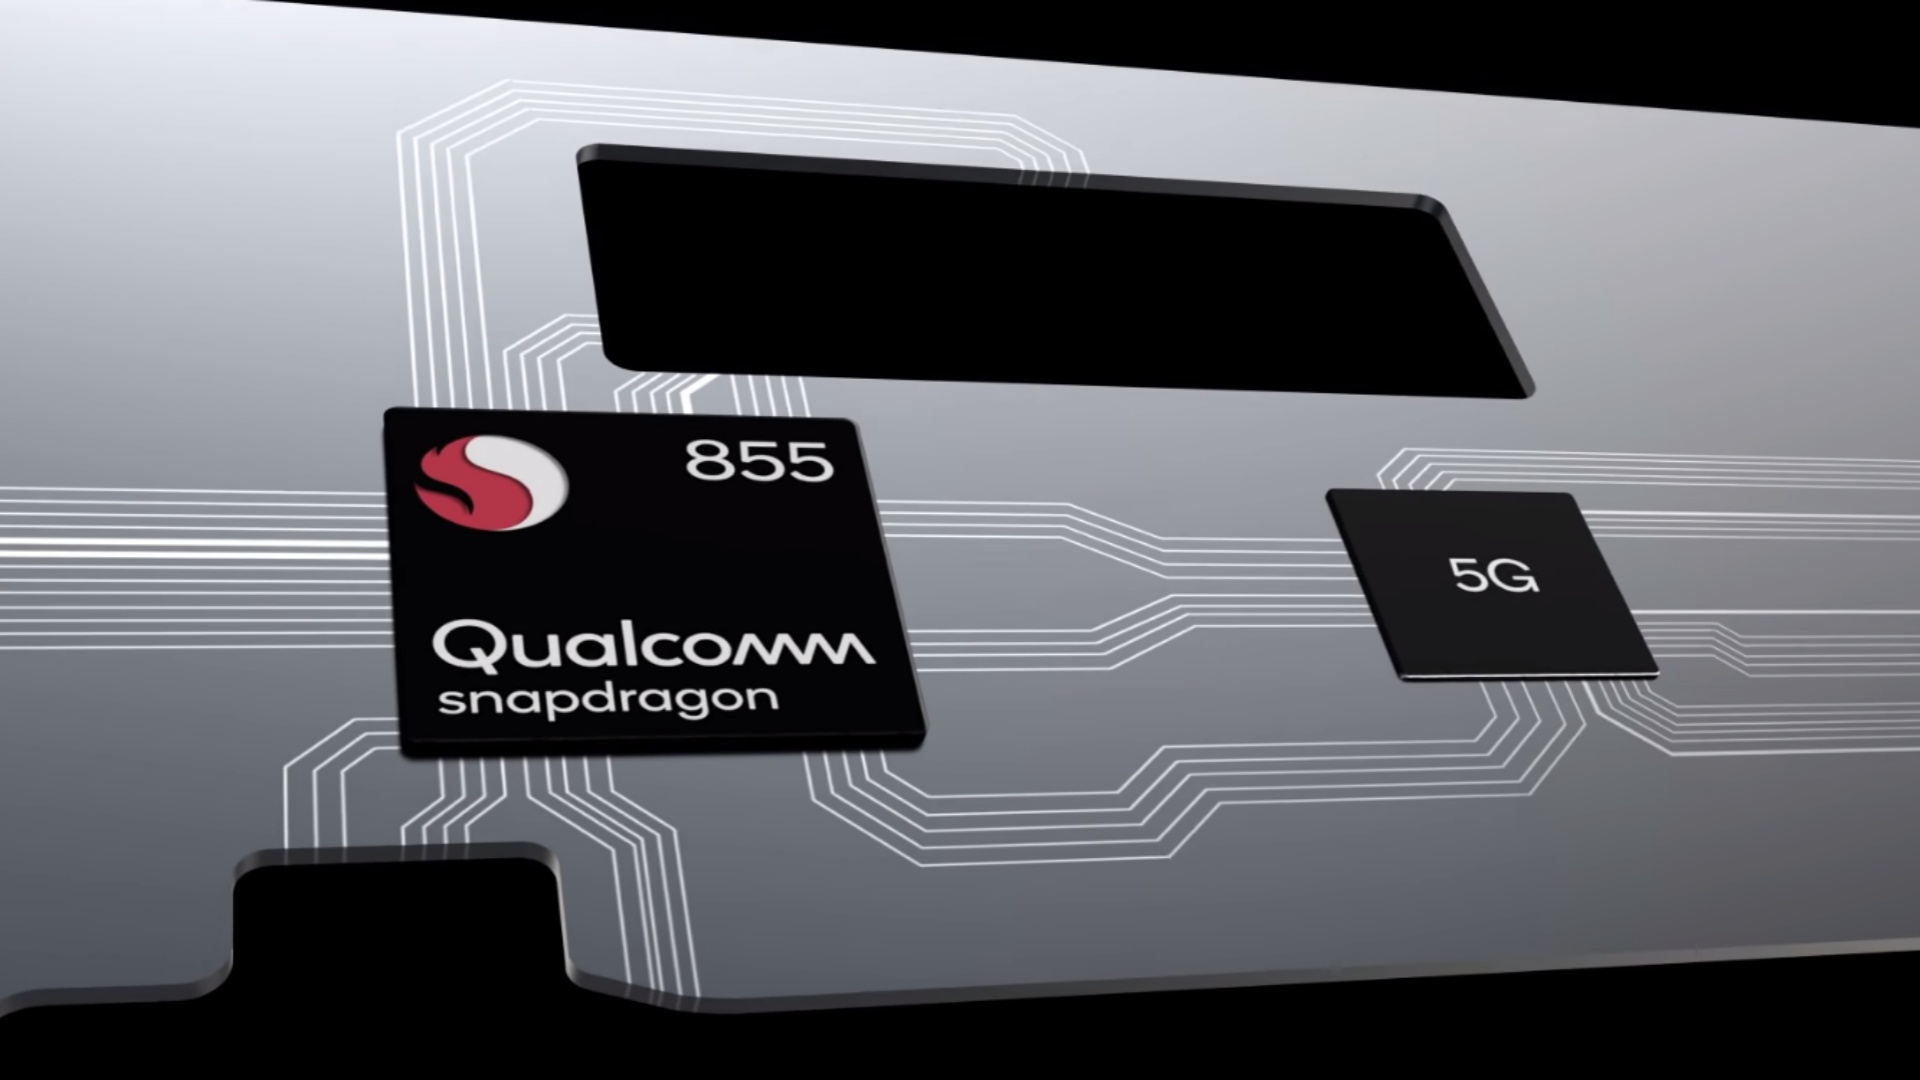 Qualcomm snapdragon 855 chipset